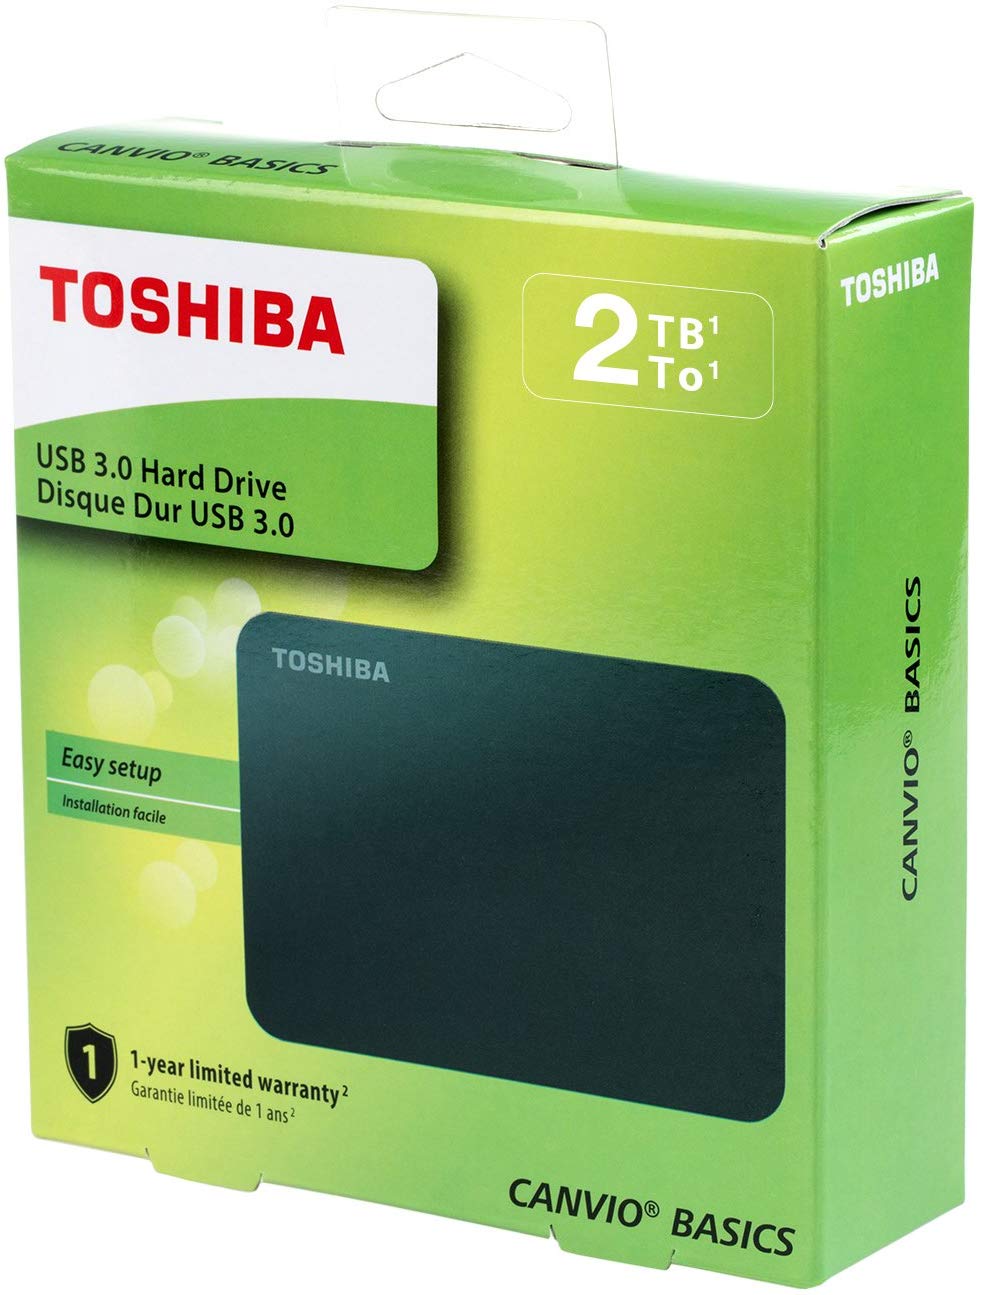 Toshiba Canvio Basics 2TB Portable External Hard Drive USB 3.0 - Black